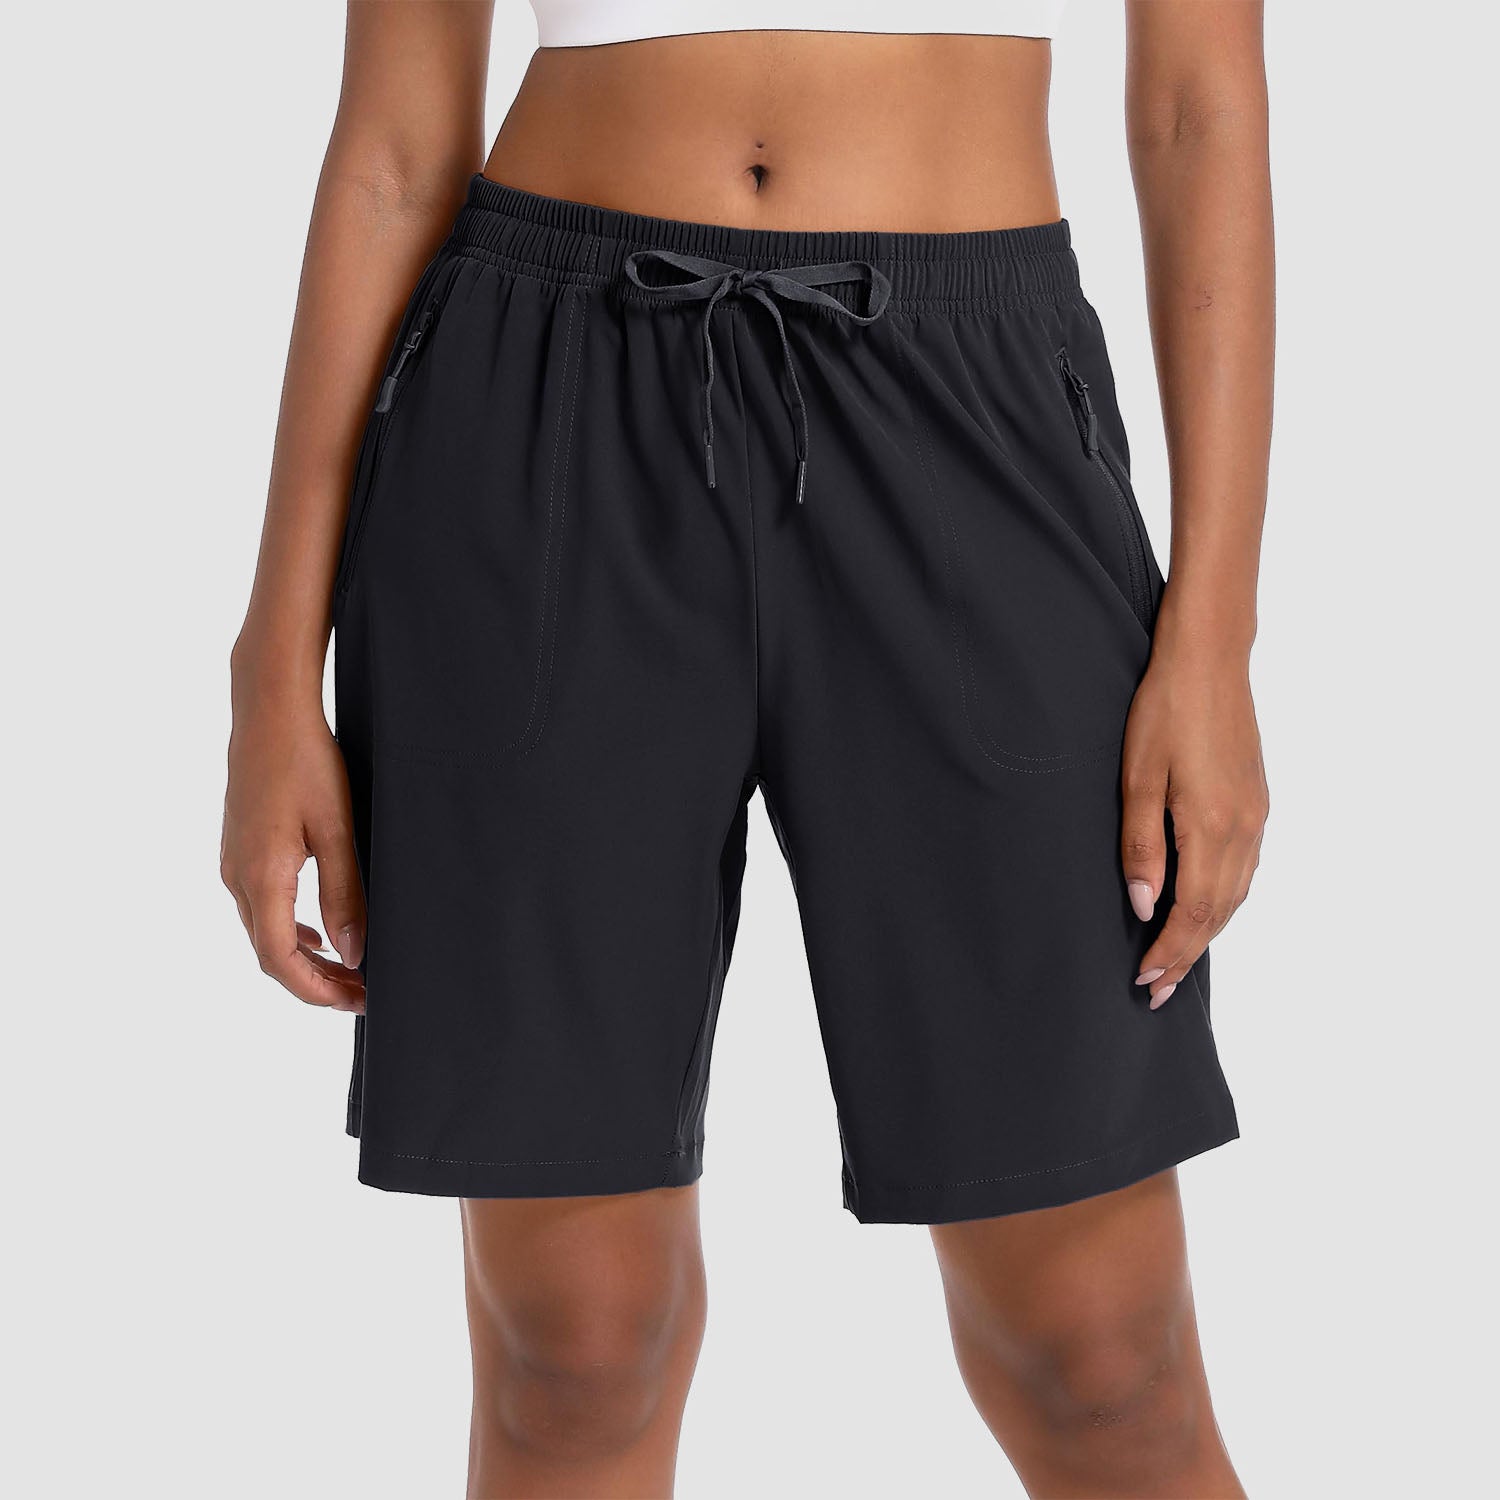 Women's Hiking Shorts Lightweight Quick Dry 8 Golf Shorts Water